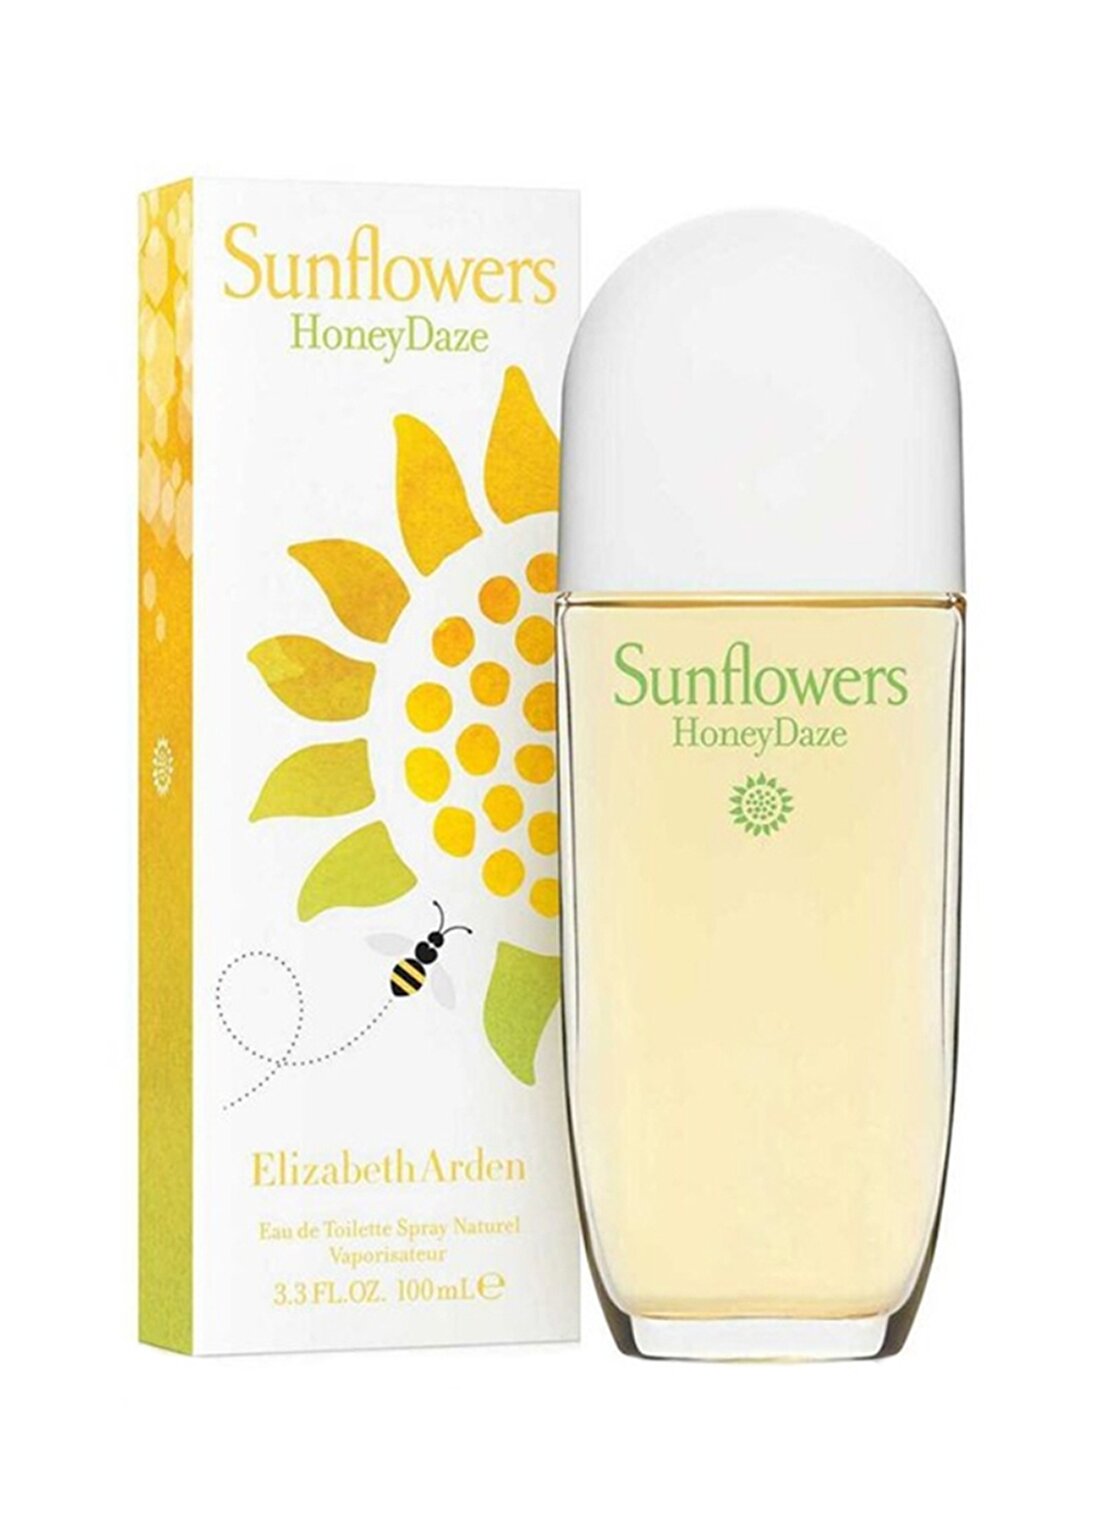 Elizabeth Arden Sunflowers Honeydaze 100 Mledt